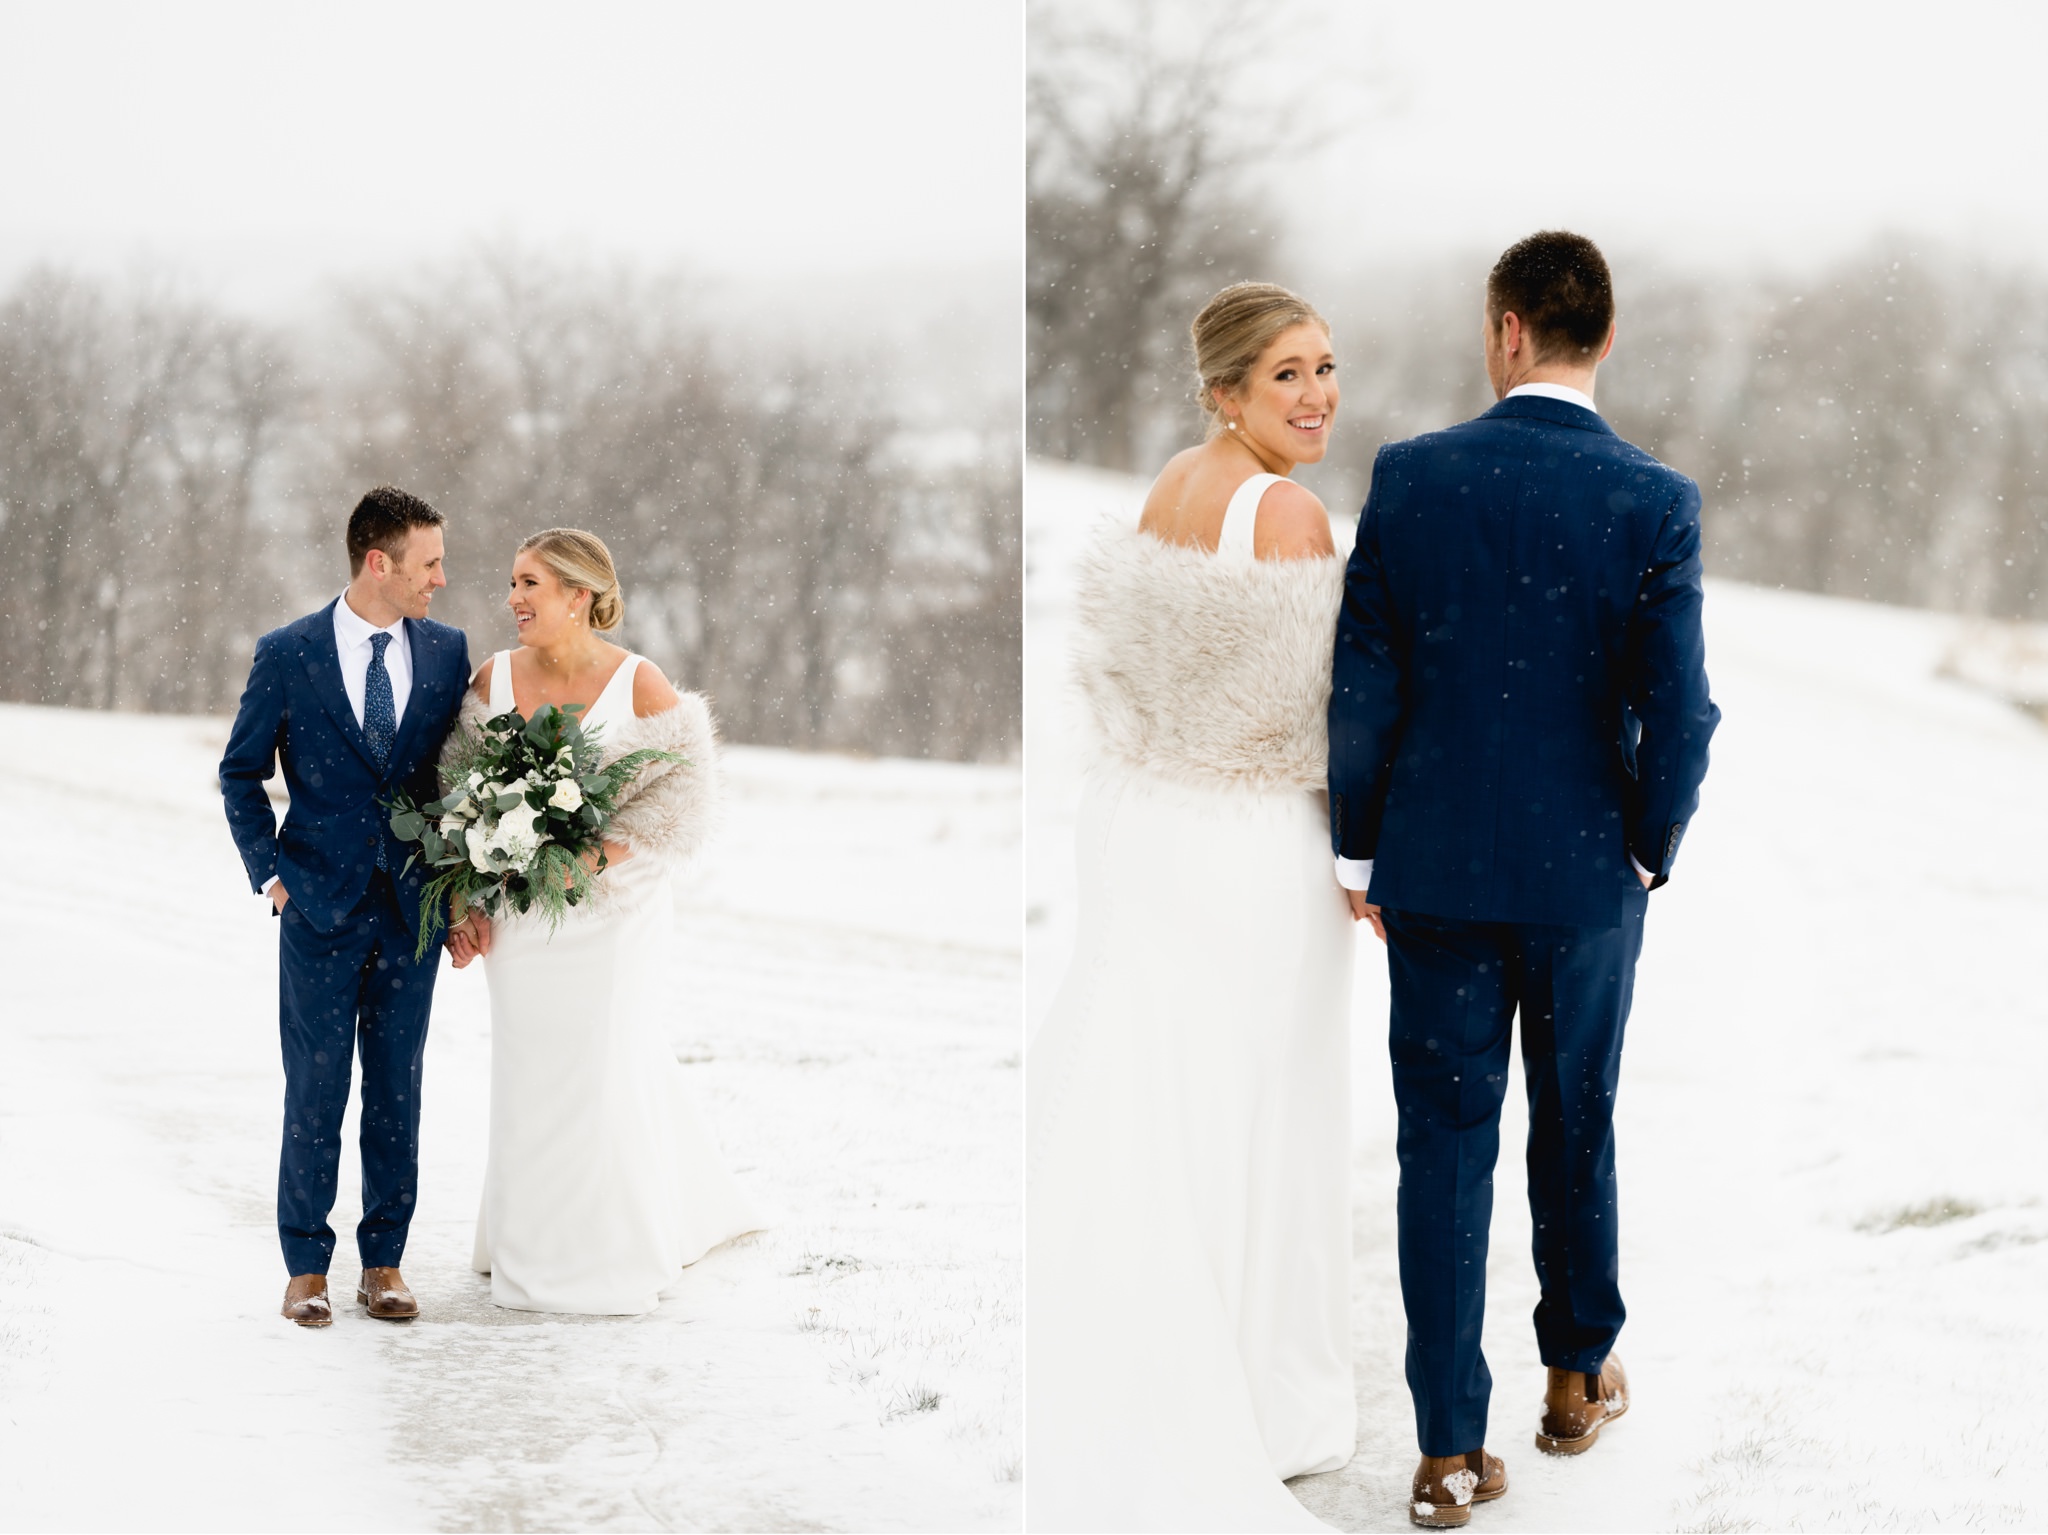 beautiful snowy wedding day portraits